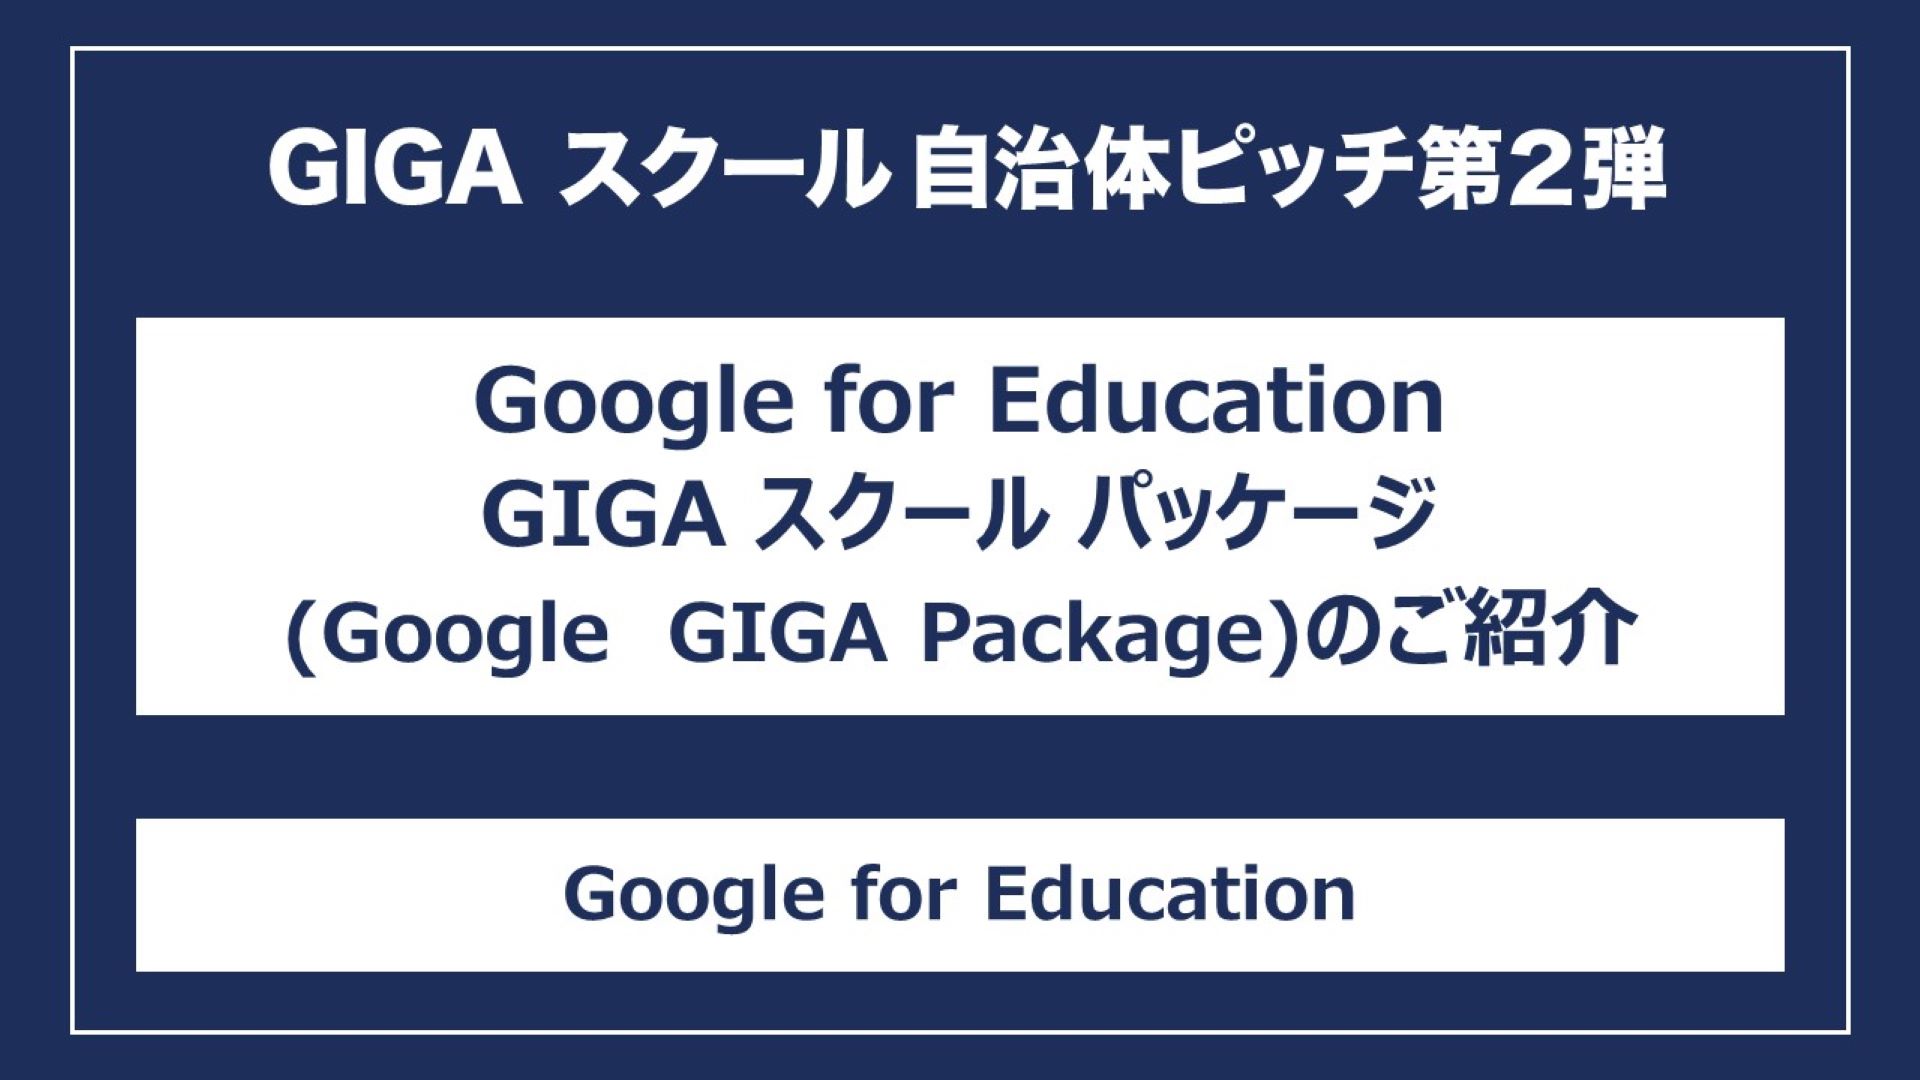 Google for Education GIGA スクール パッケージ（Google GIGA Package）のご紹介